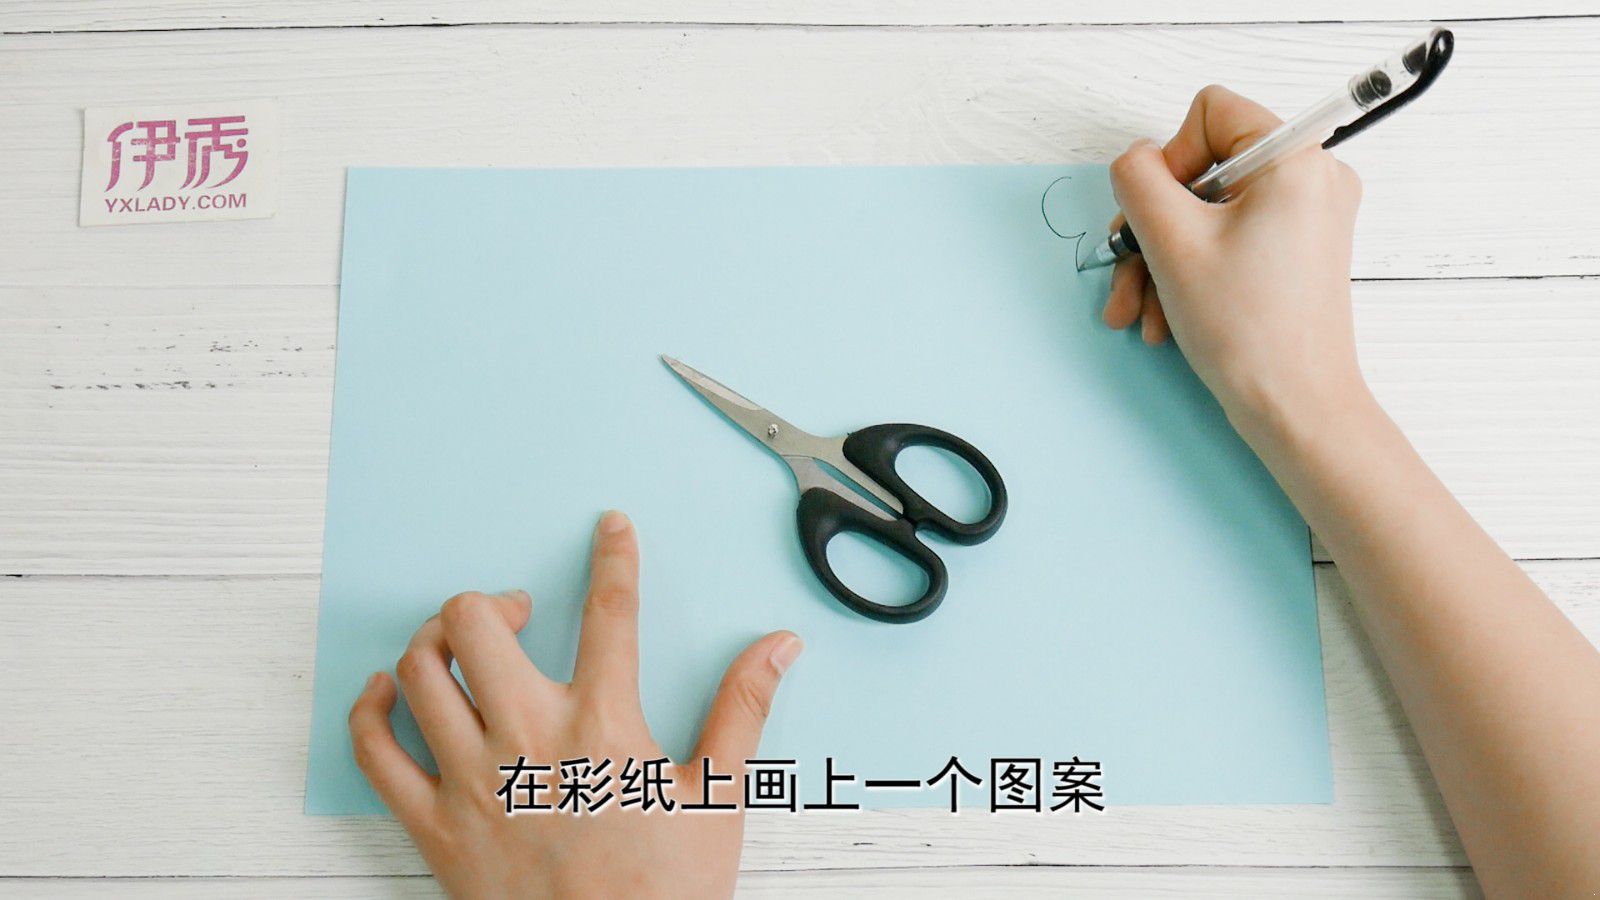 【2020IF奖】Faber-Castell儿童剪刀——安全帮助孩子提升创造力～ - 普象网